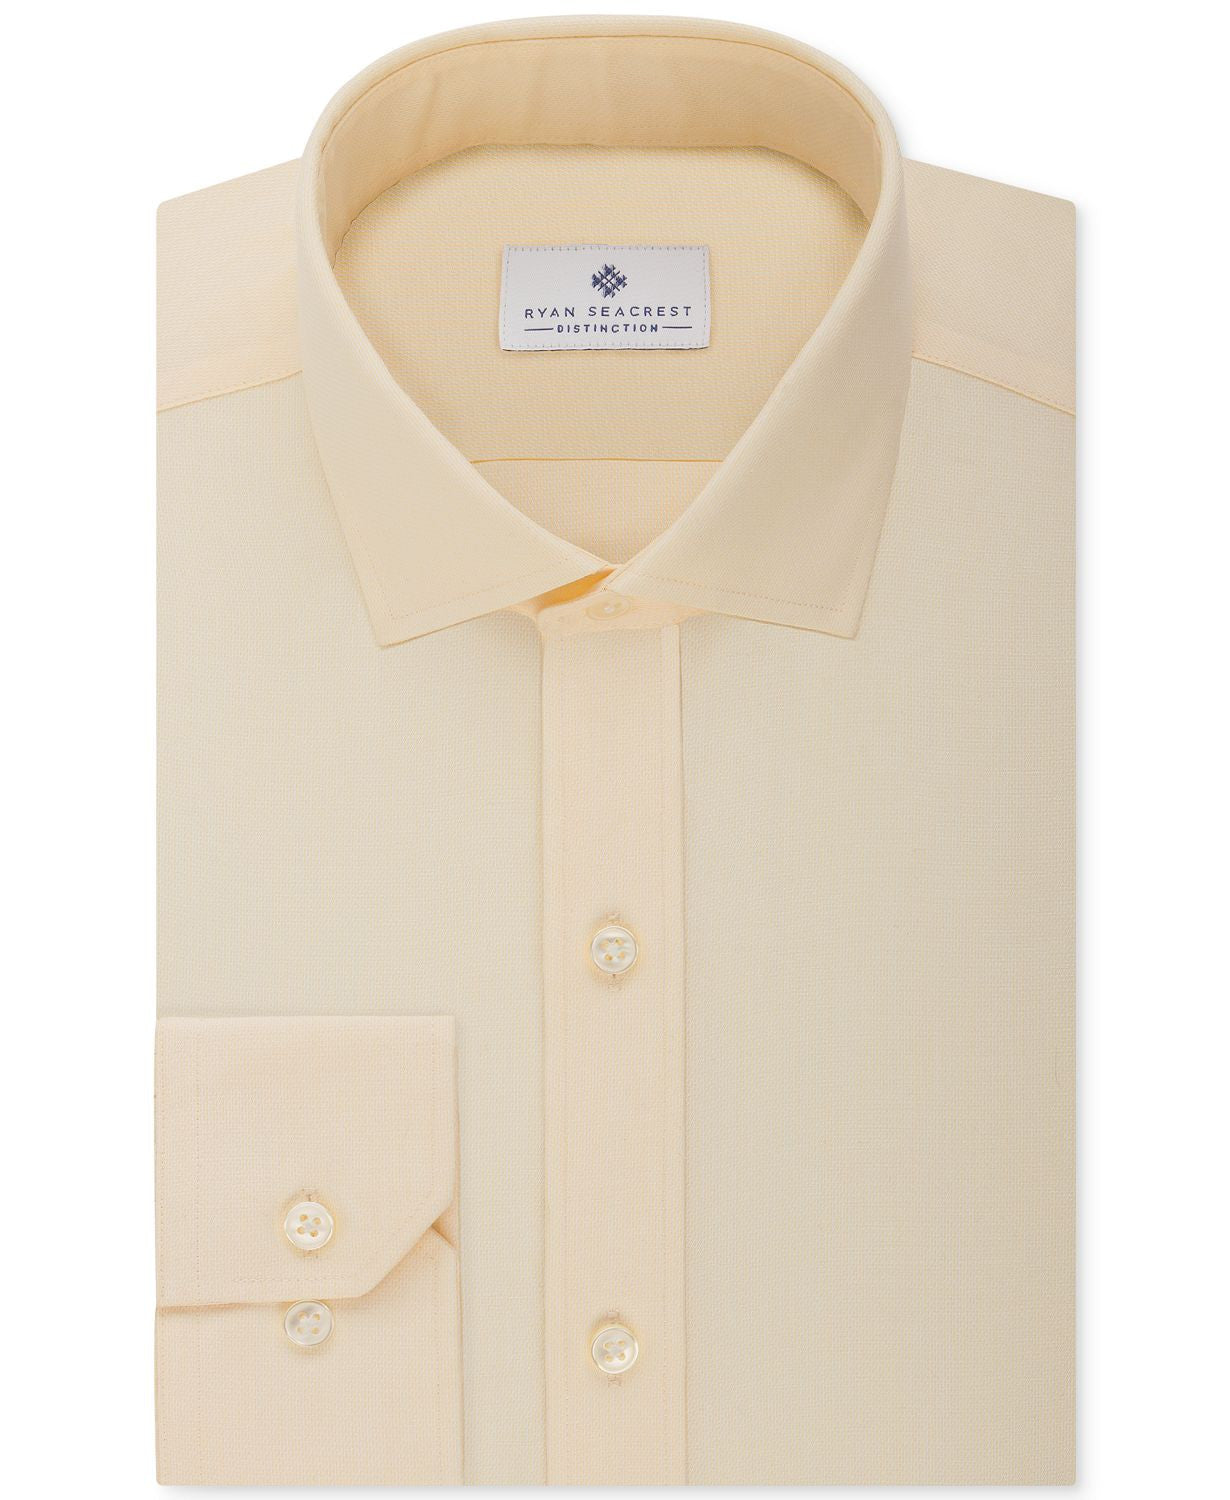 Ryan Seacrest Distinction Slim-fit Non-iron Solid Dress Shirt Banana Cream